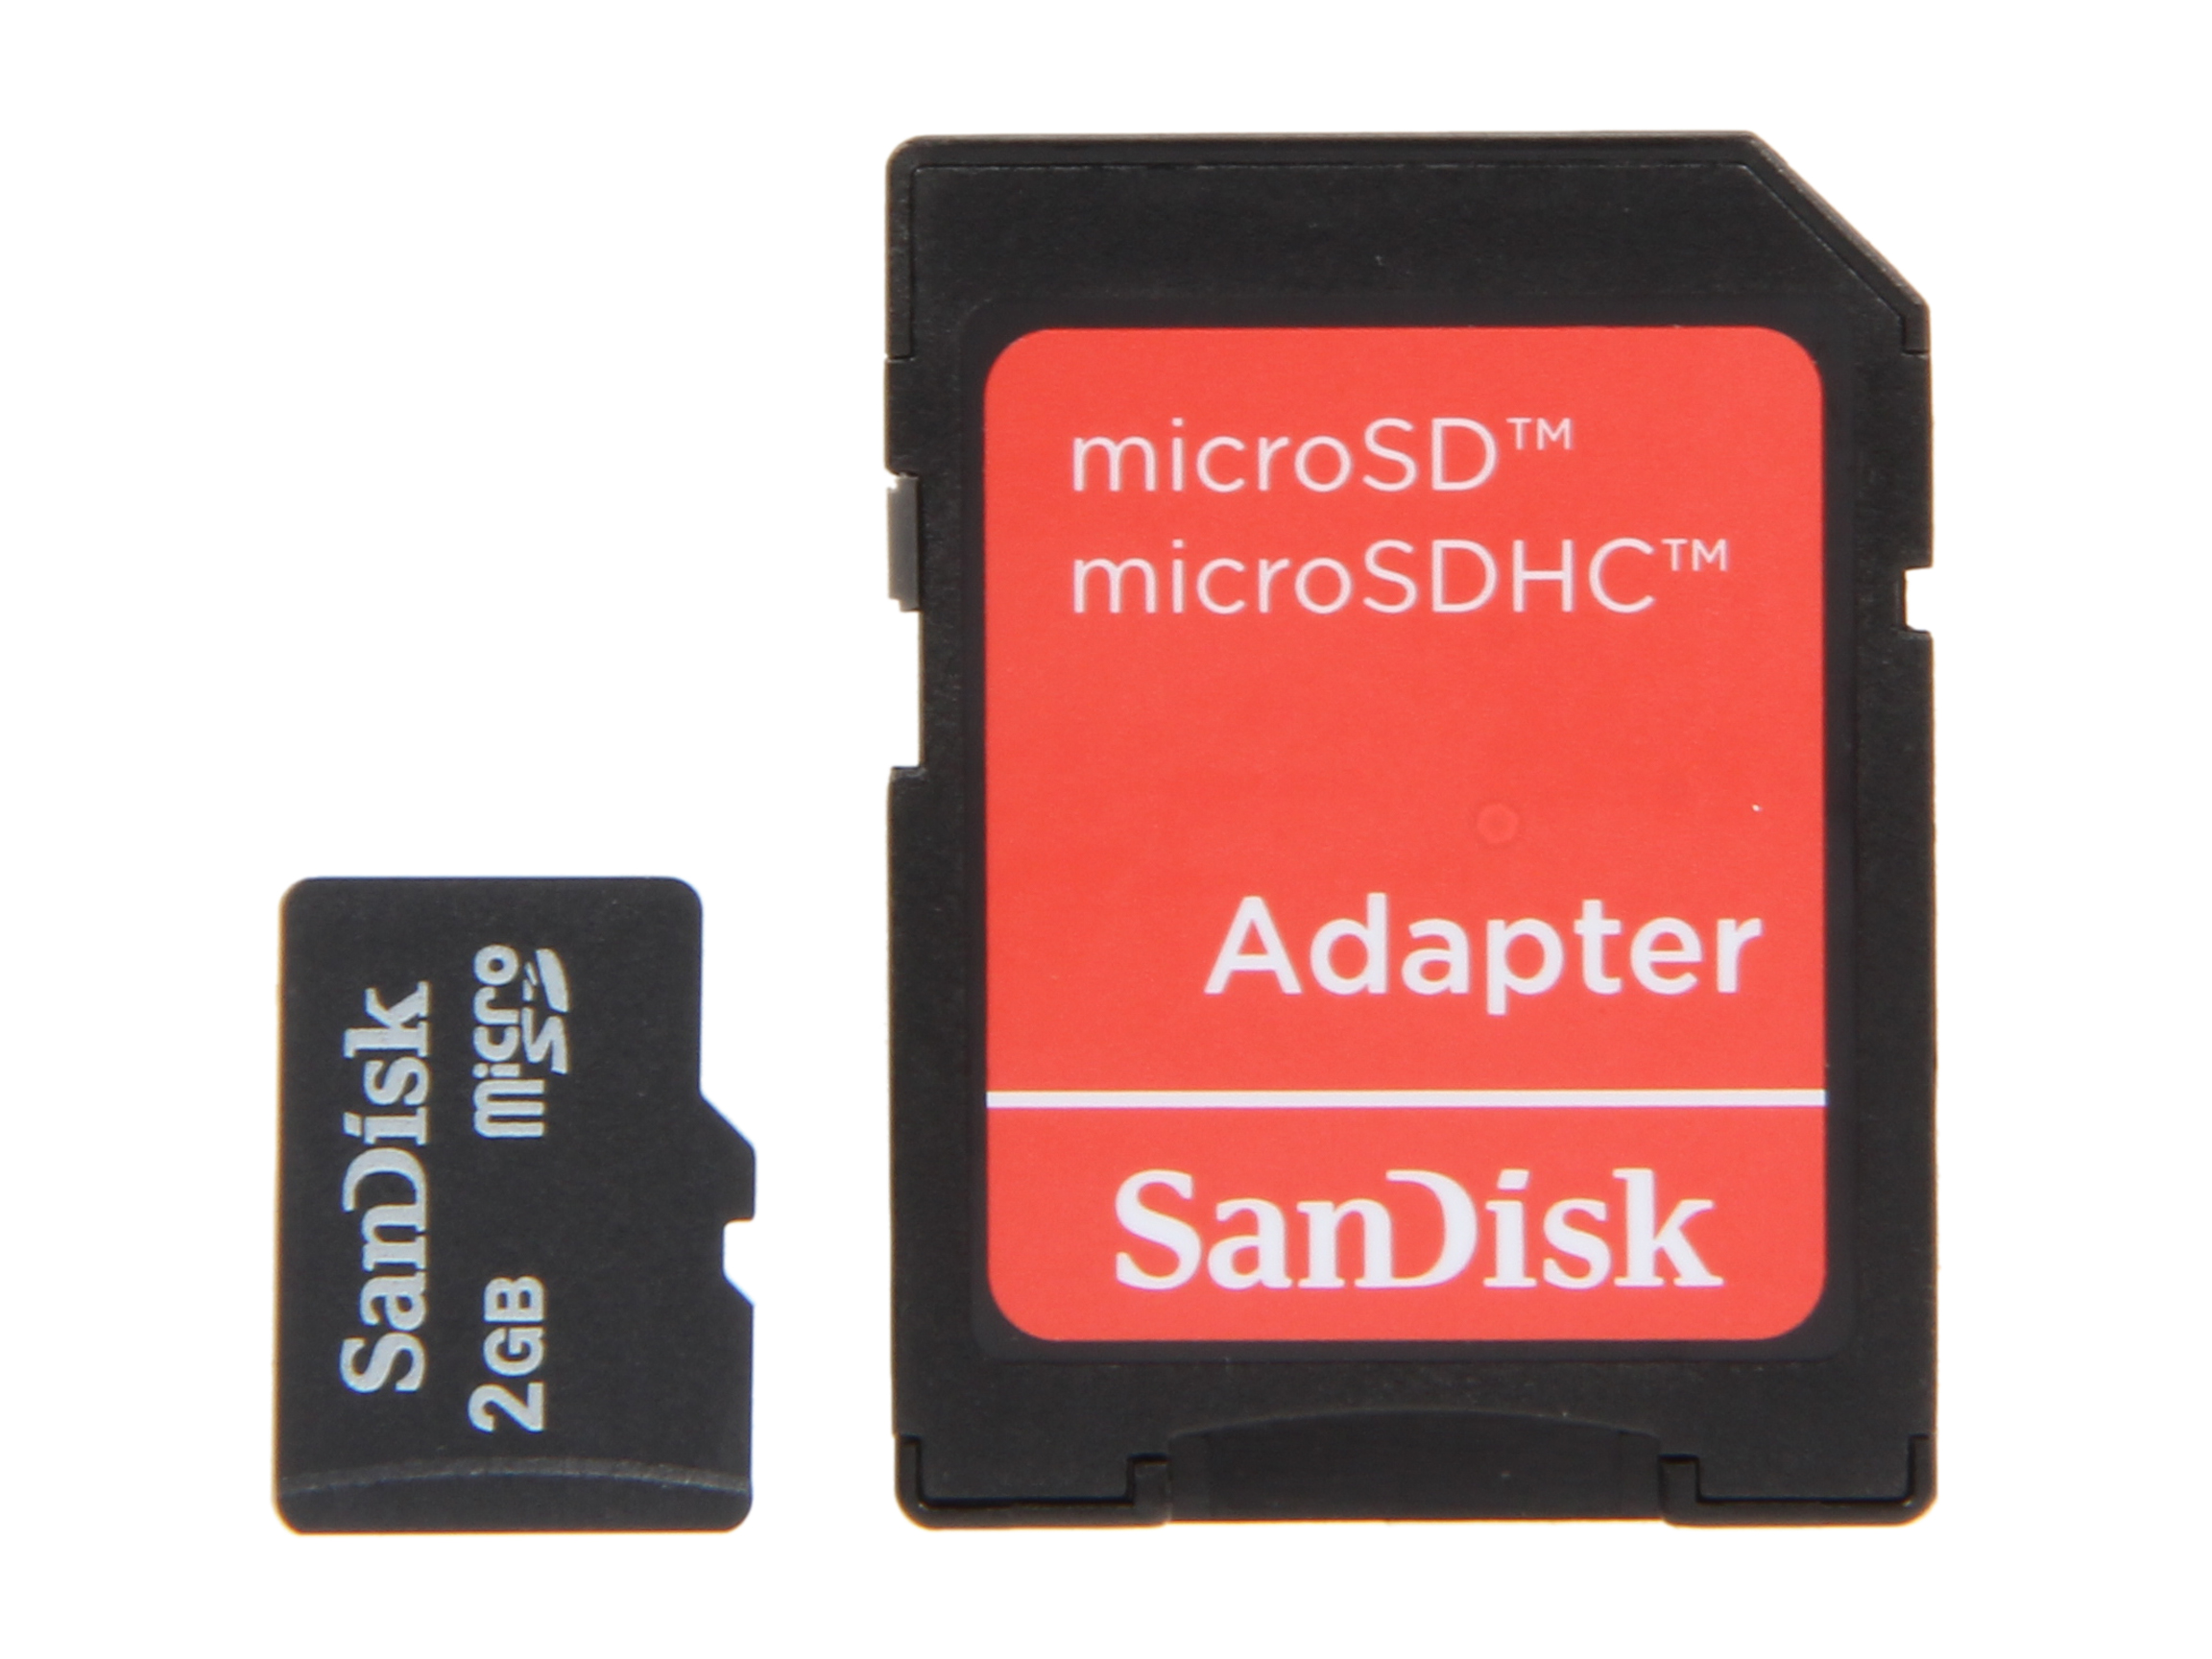 SanDisk 16GB microSDHC Flash Card Model SDSDQM 016G B35